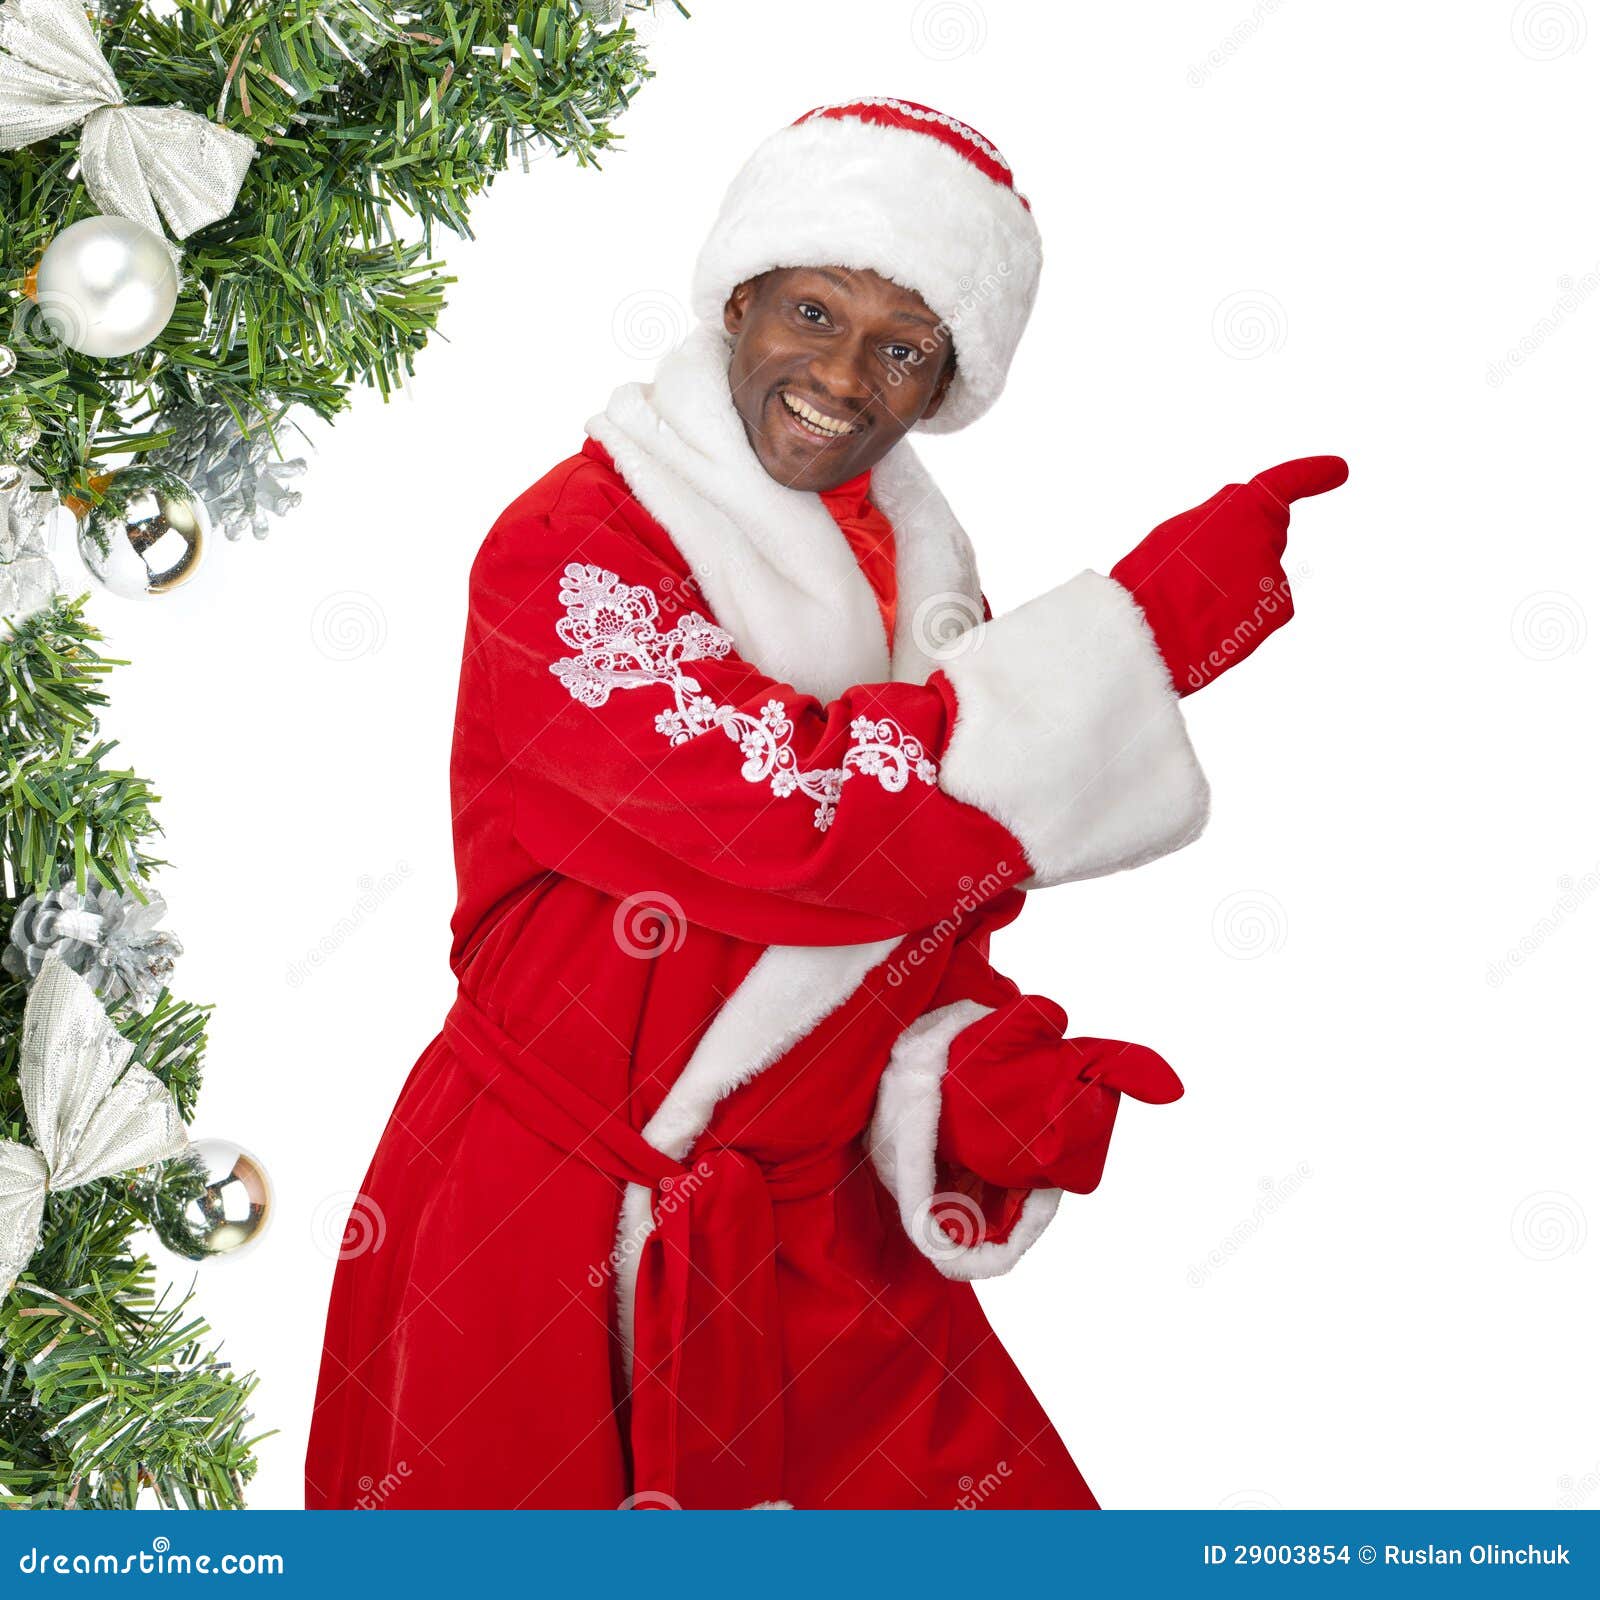 Black Santa Photos Download The BEST Free Black Santa Stock Photos  HD  Images